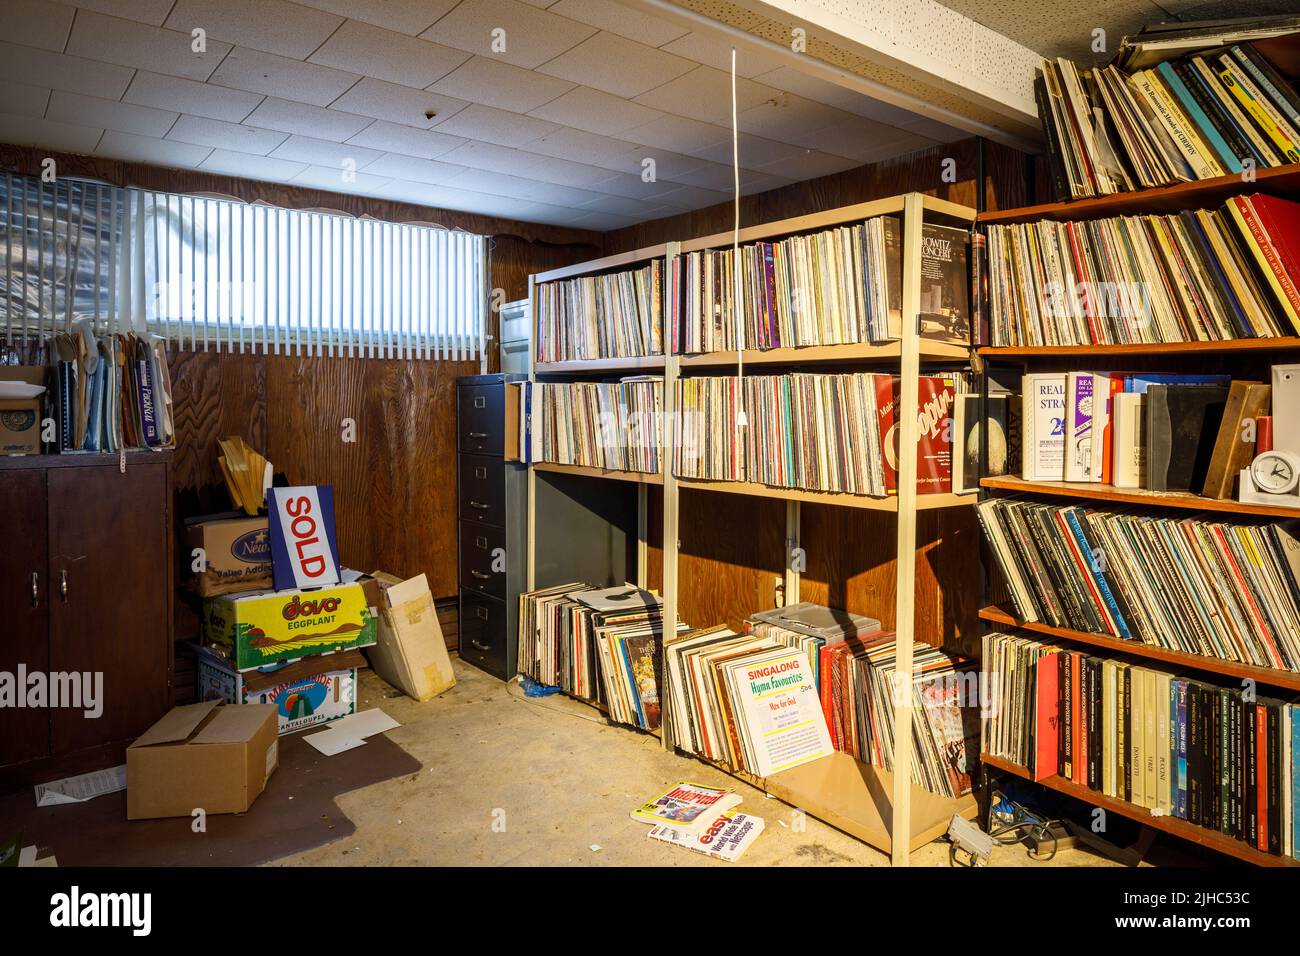 Shelves of vinyl records in a basement. Stock Photo